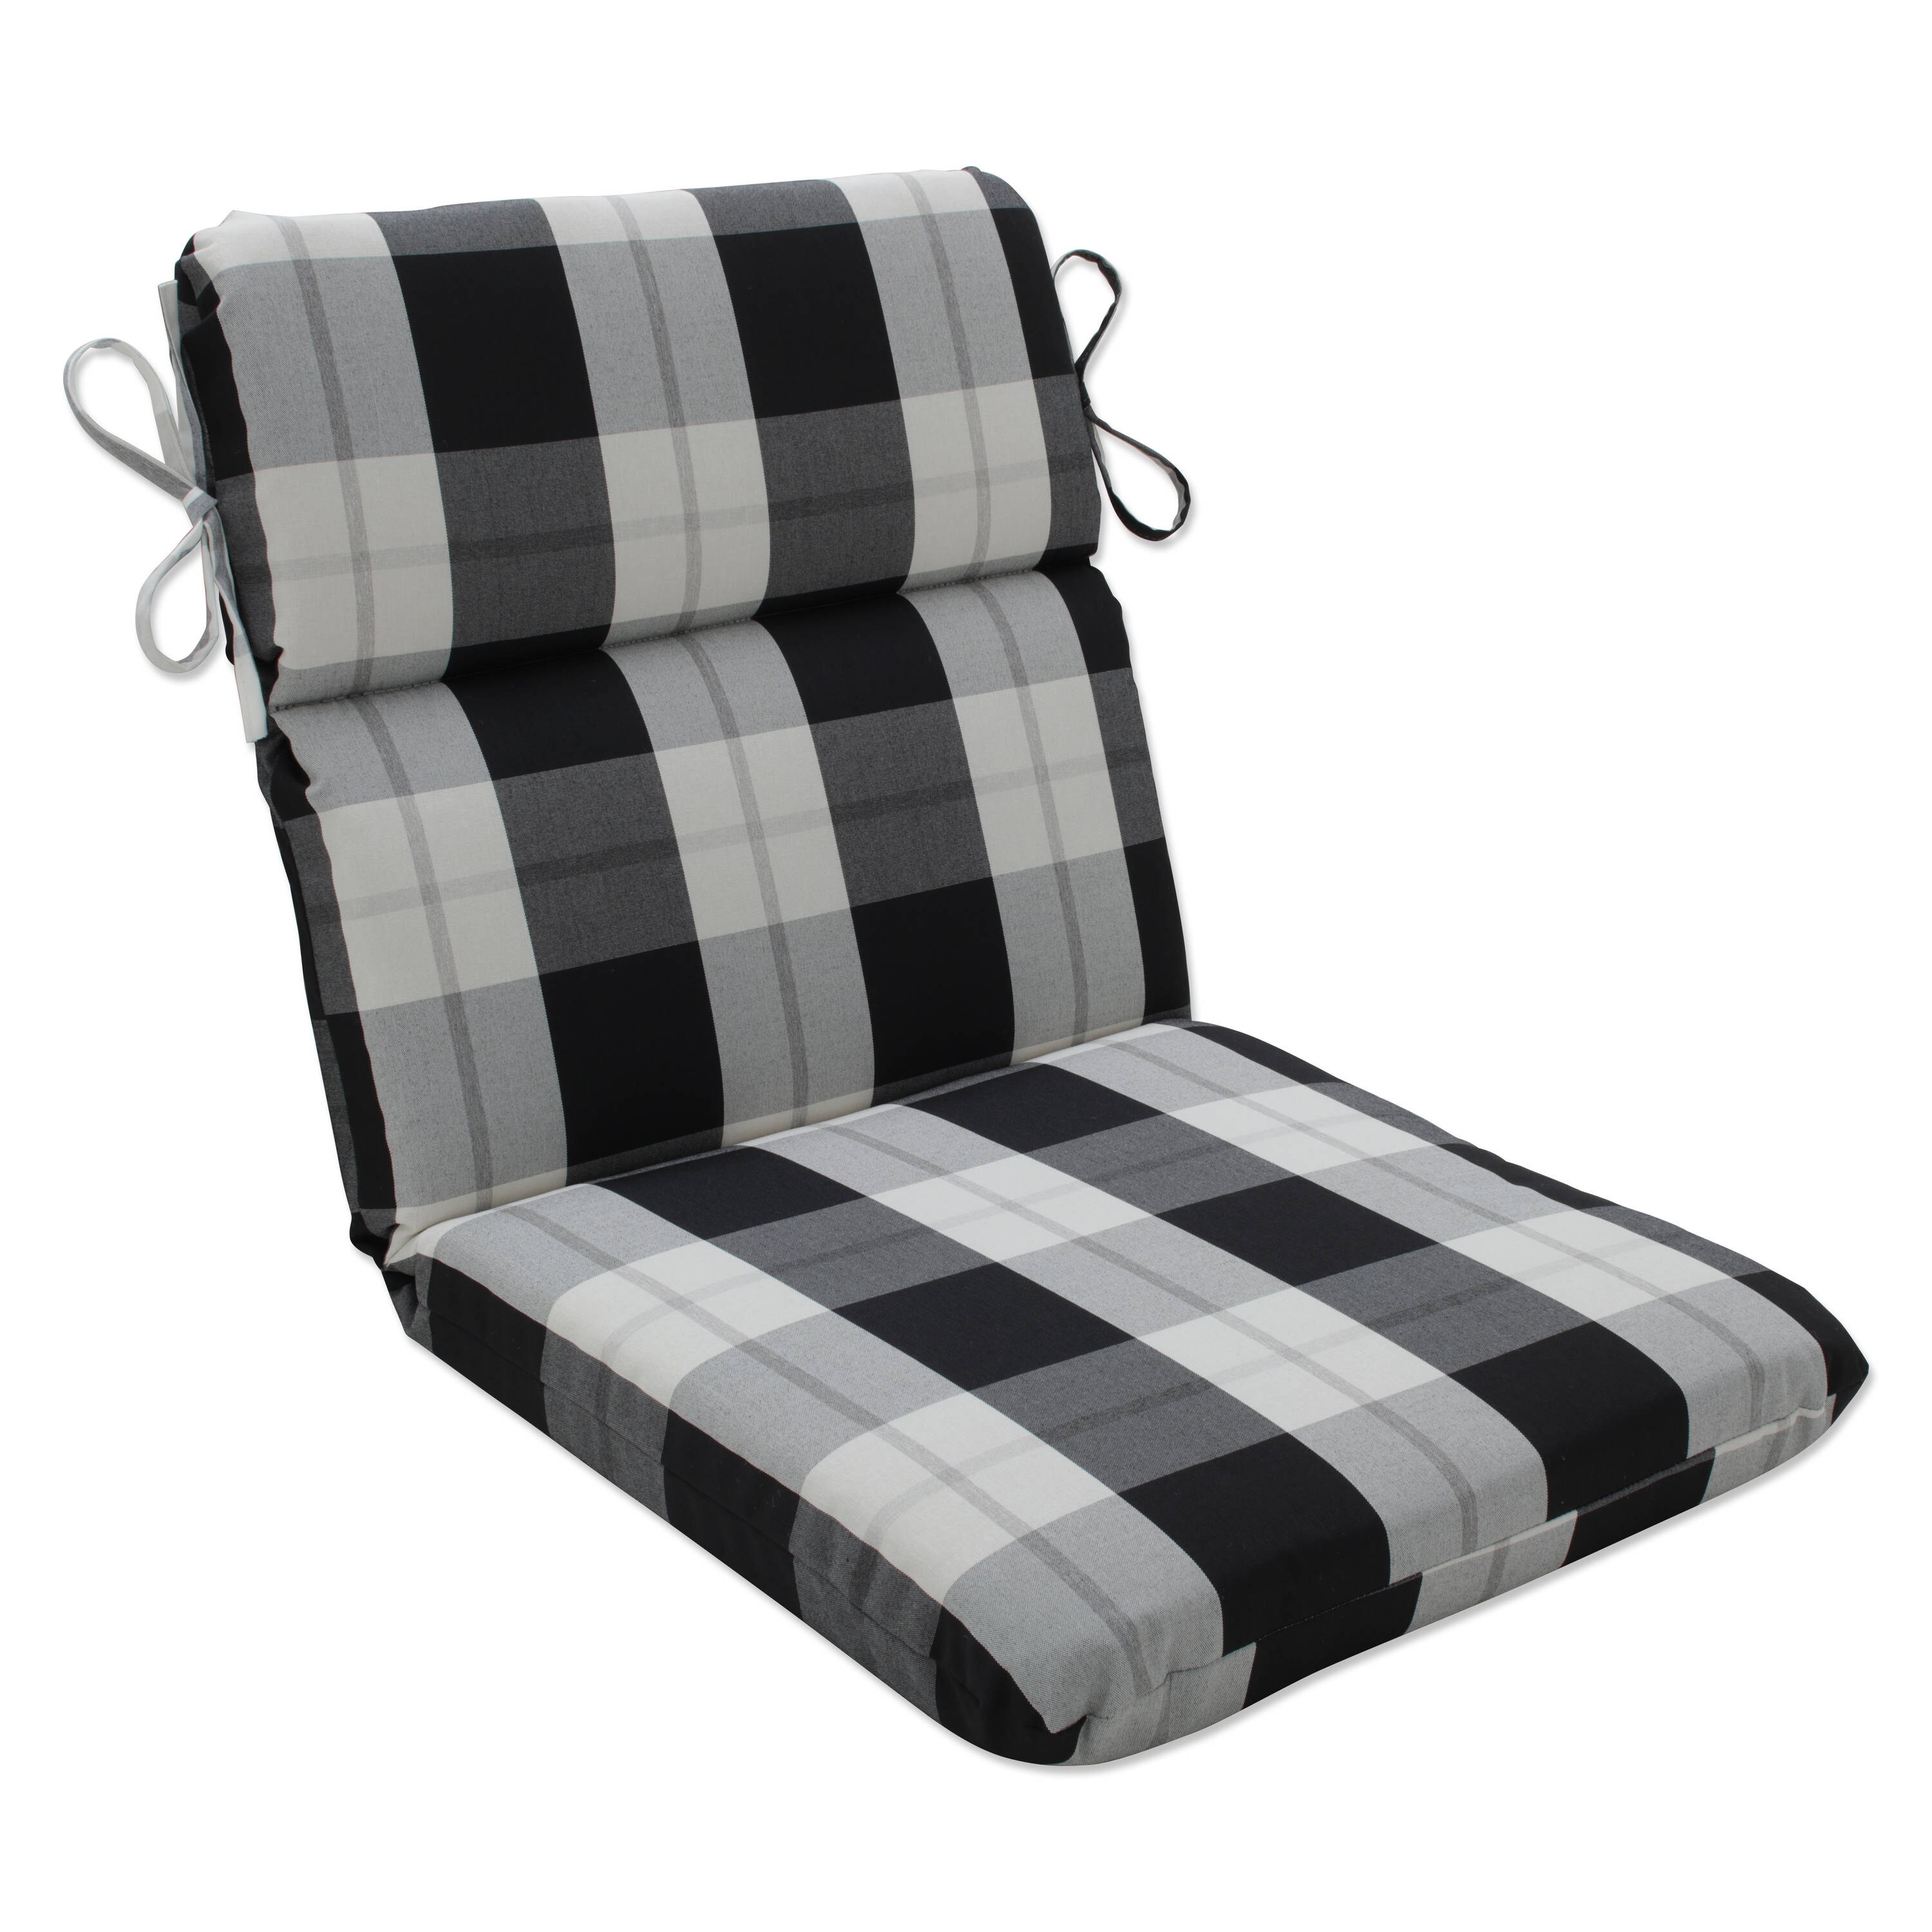 60 X 14 BLACK AND WHITE Buffalo Plaid Tufted Bench Cushion, Seat